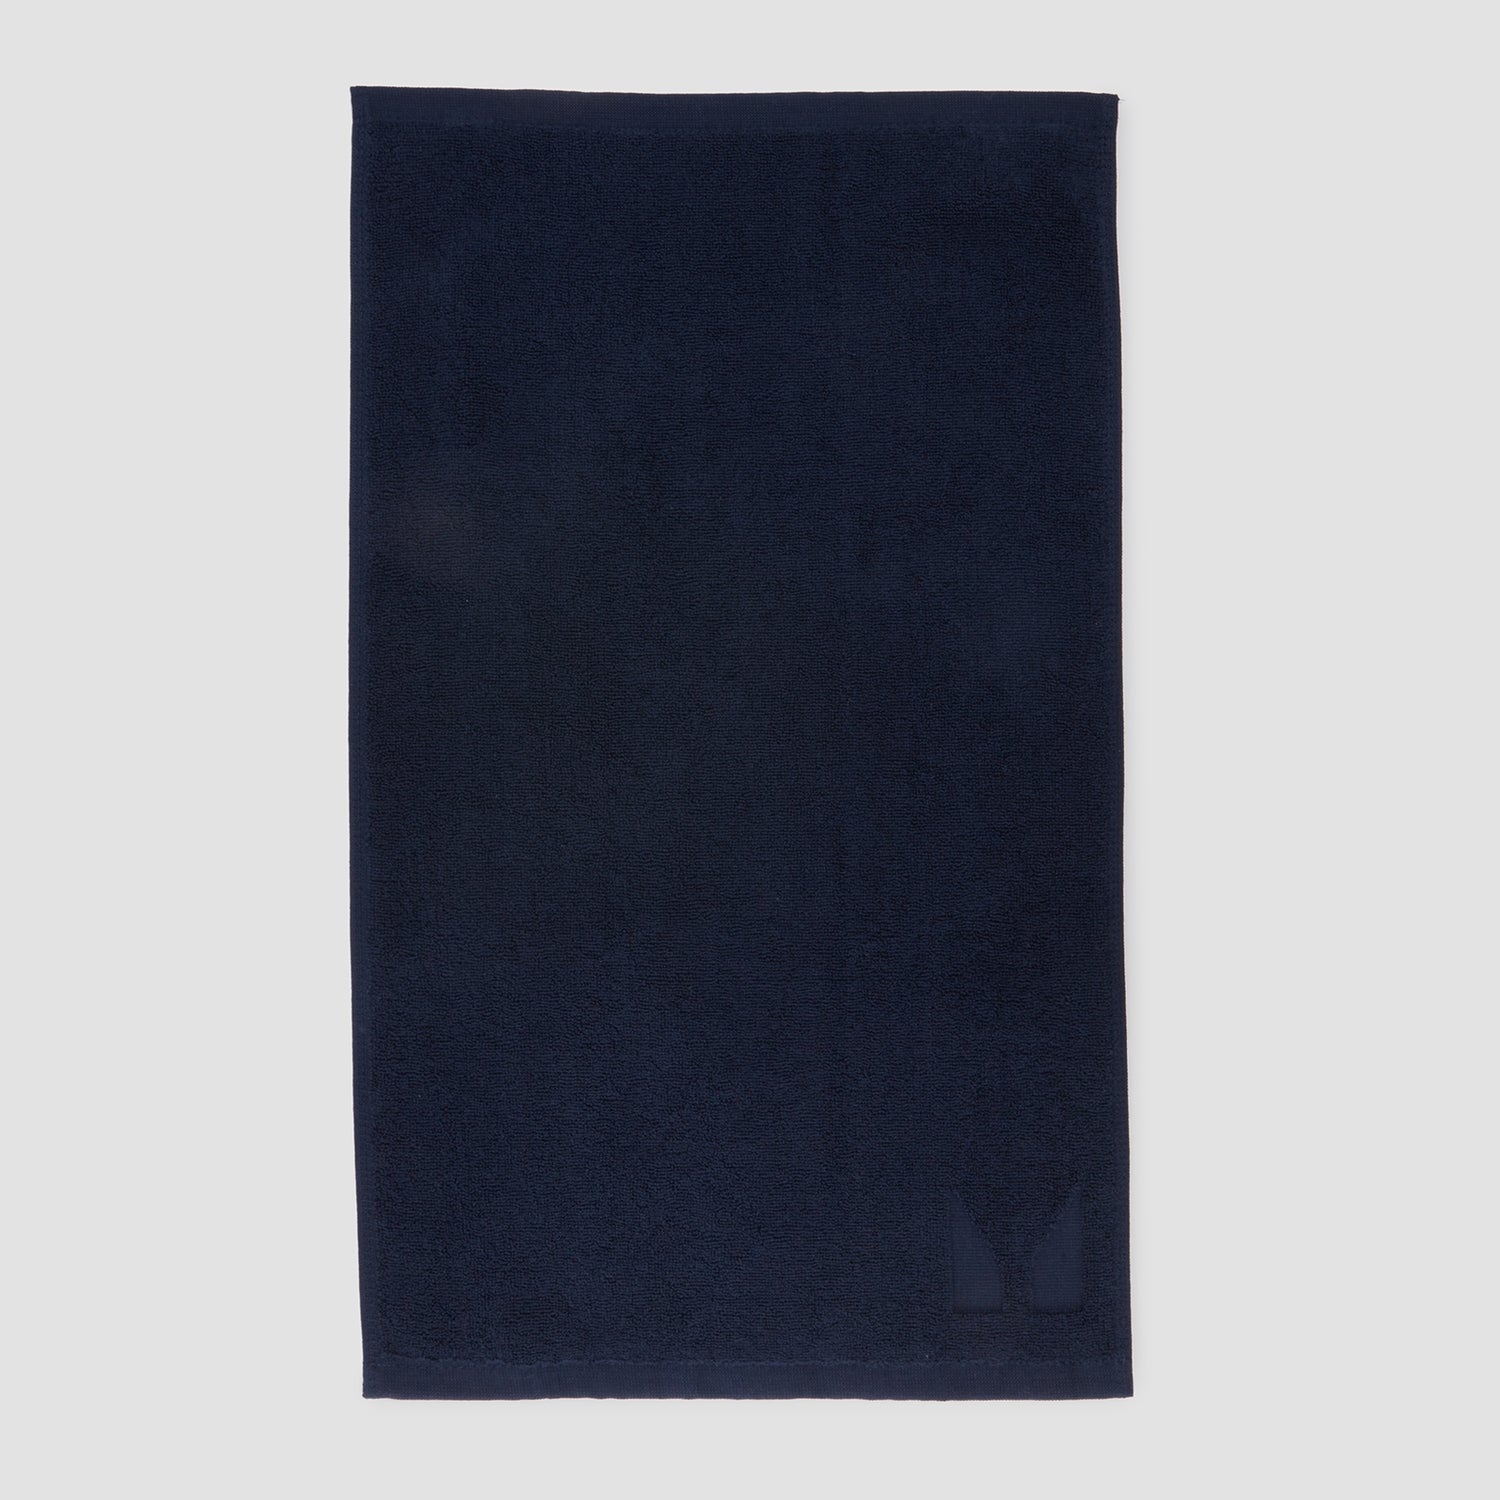 Asciugamano MP - Blu navy scuro